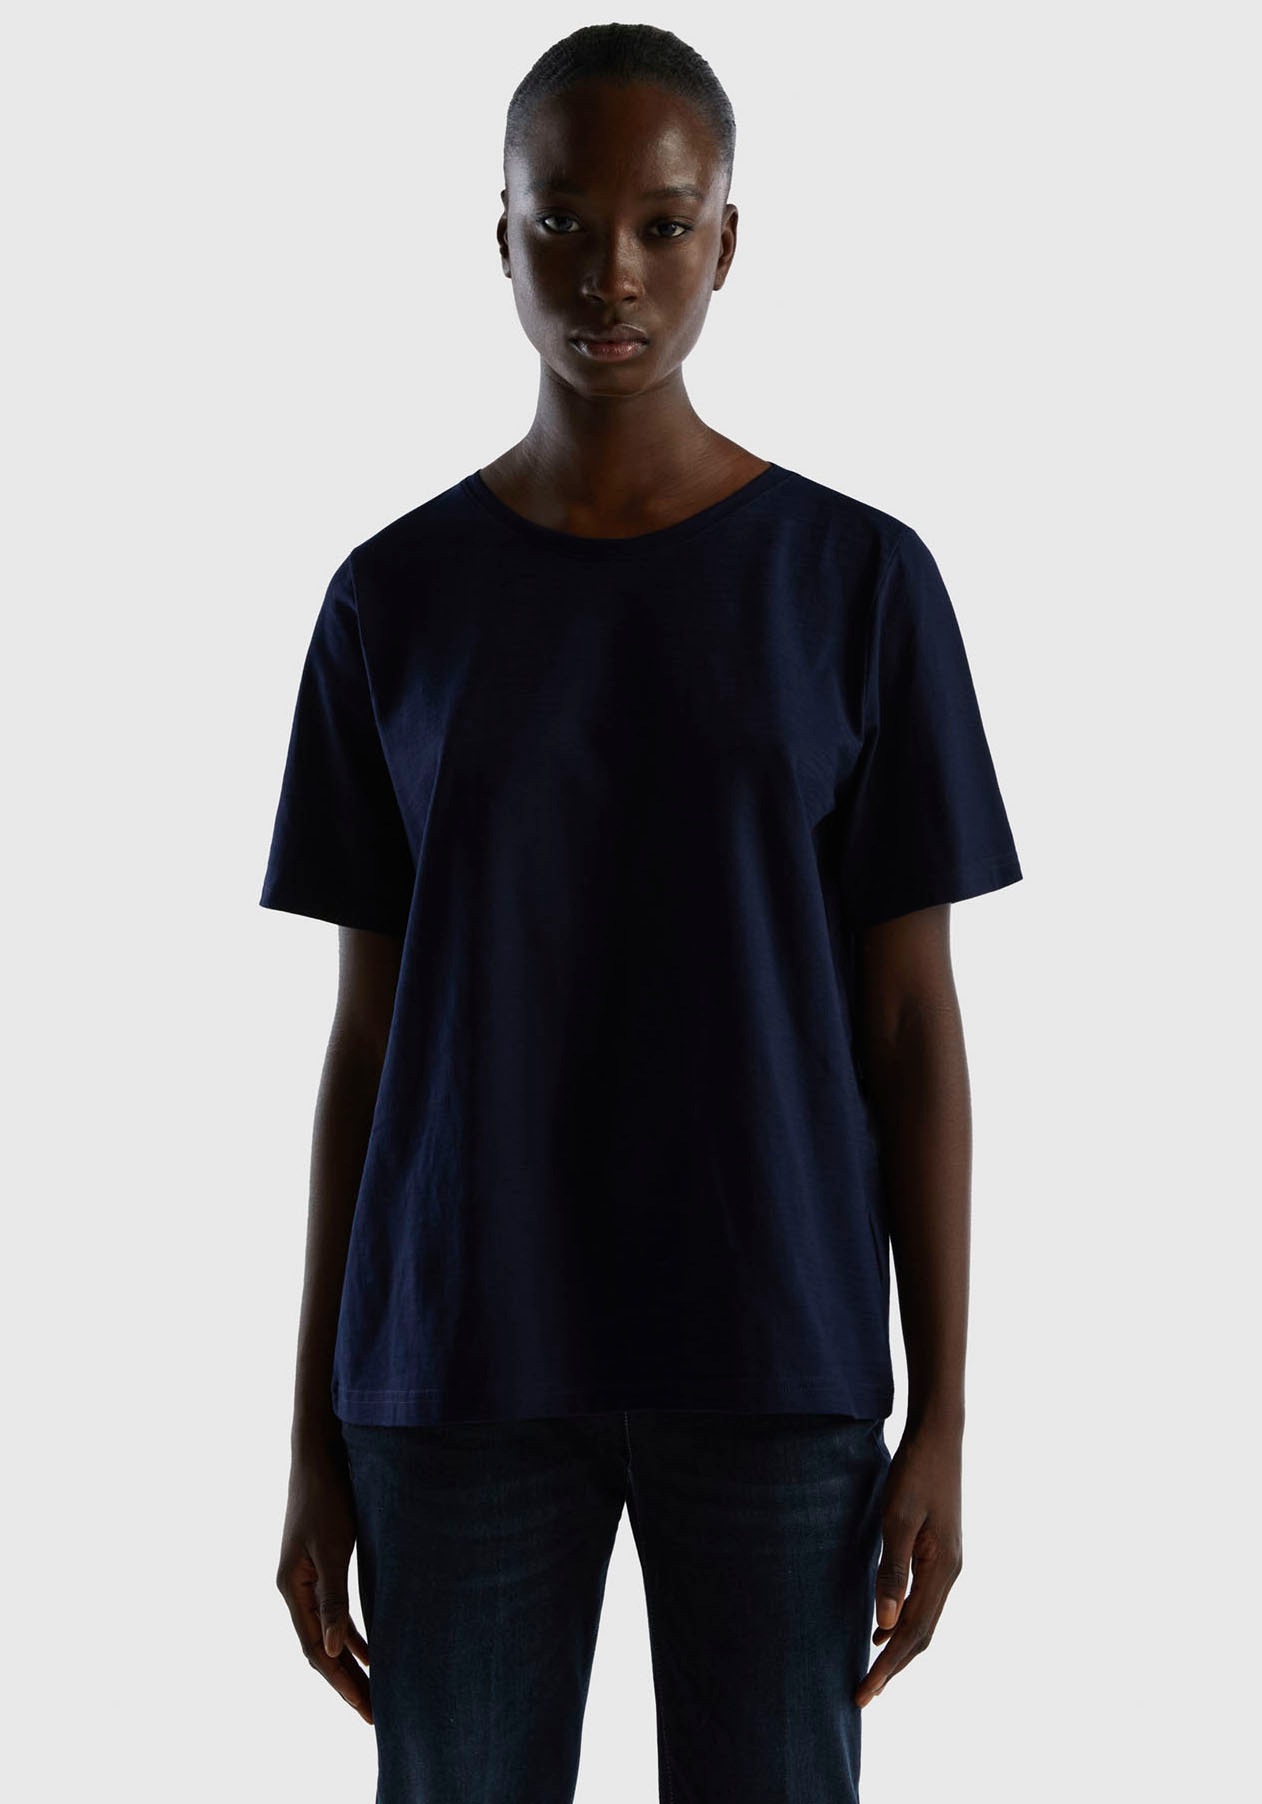 Benetton T-Shirt, of bei cleaner Colors bestellen Basic-Optik in OTTO online United